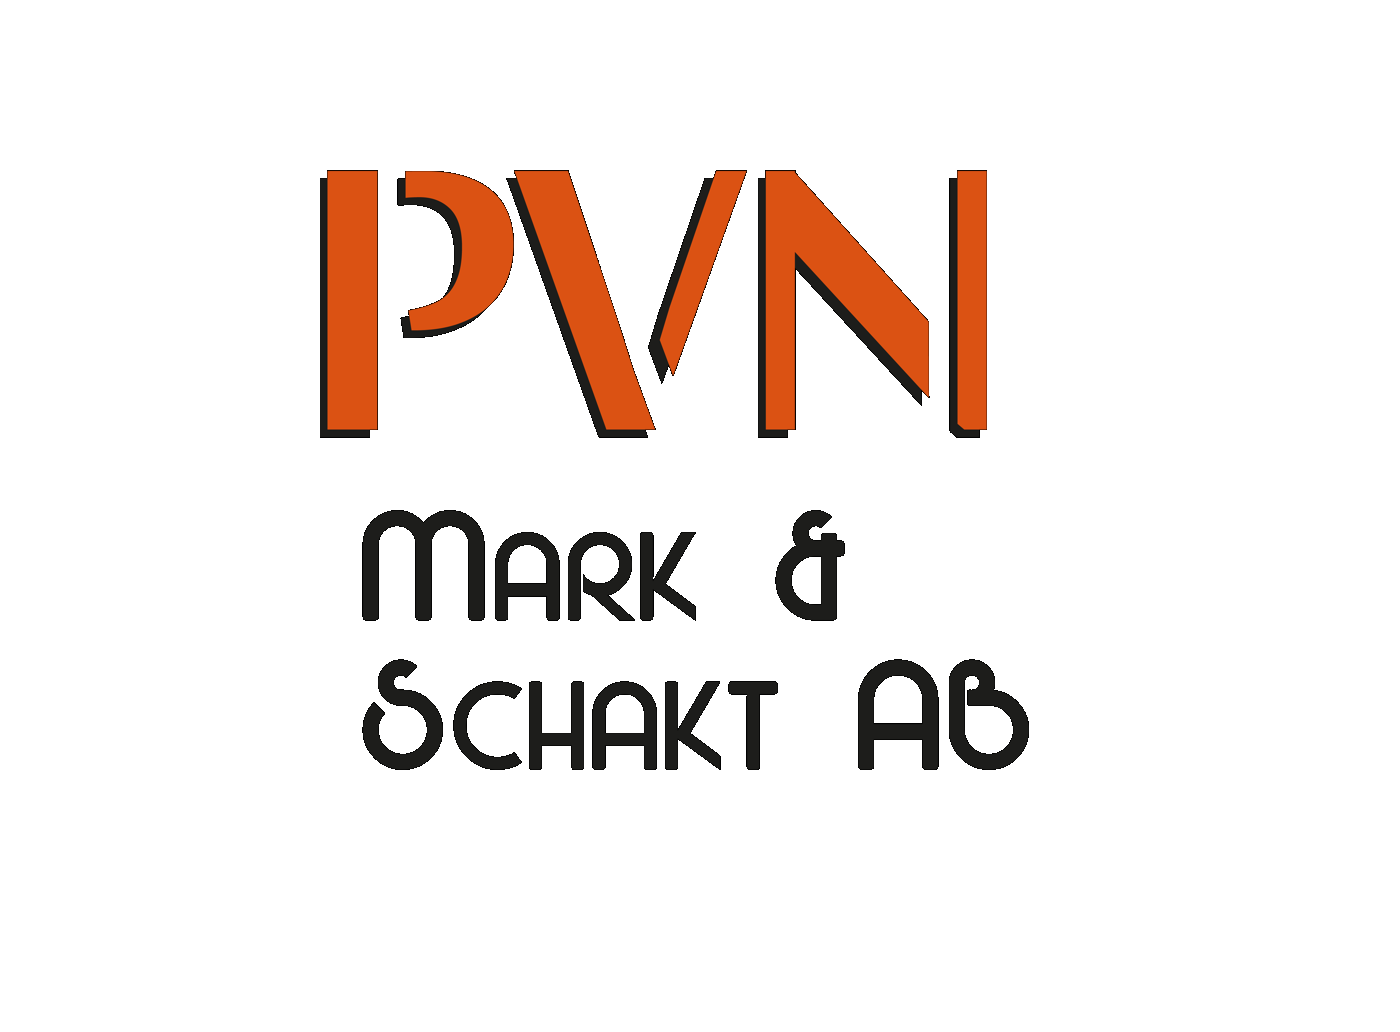 PVN Mark & Schakt AB